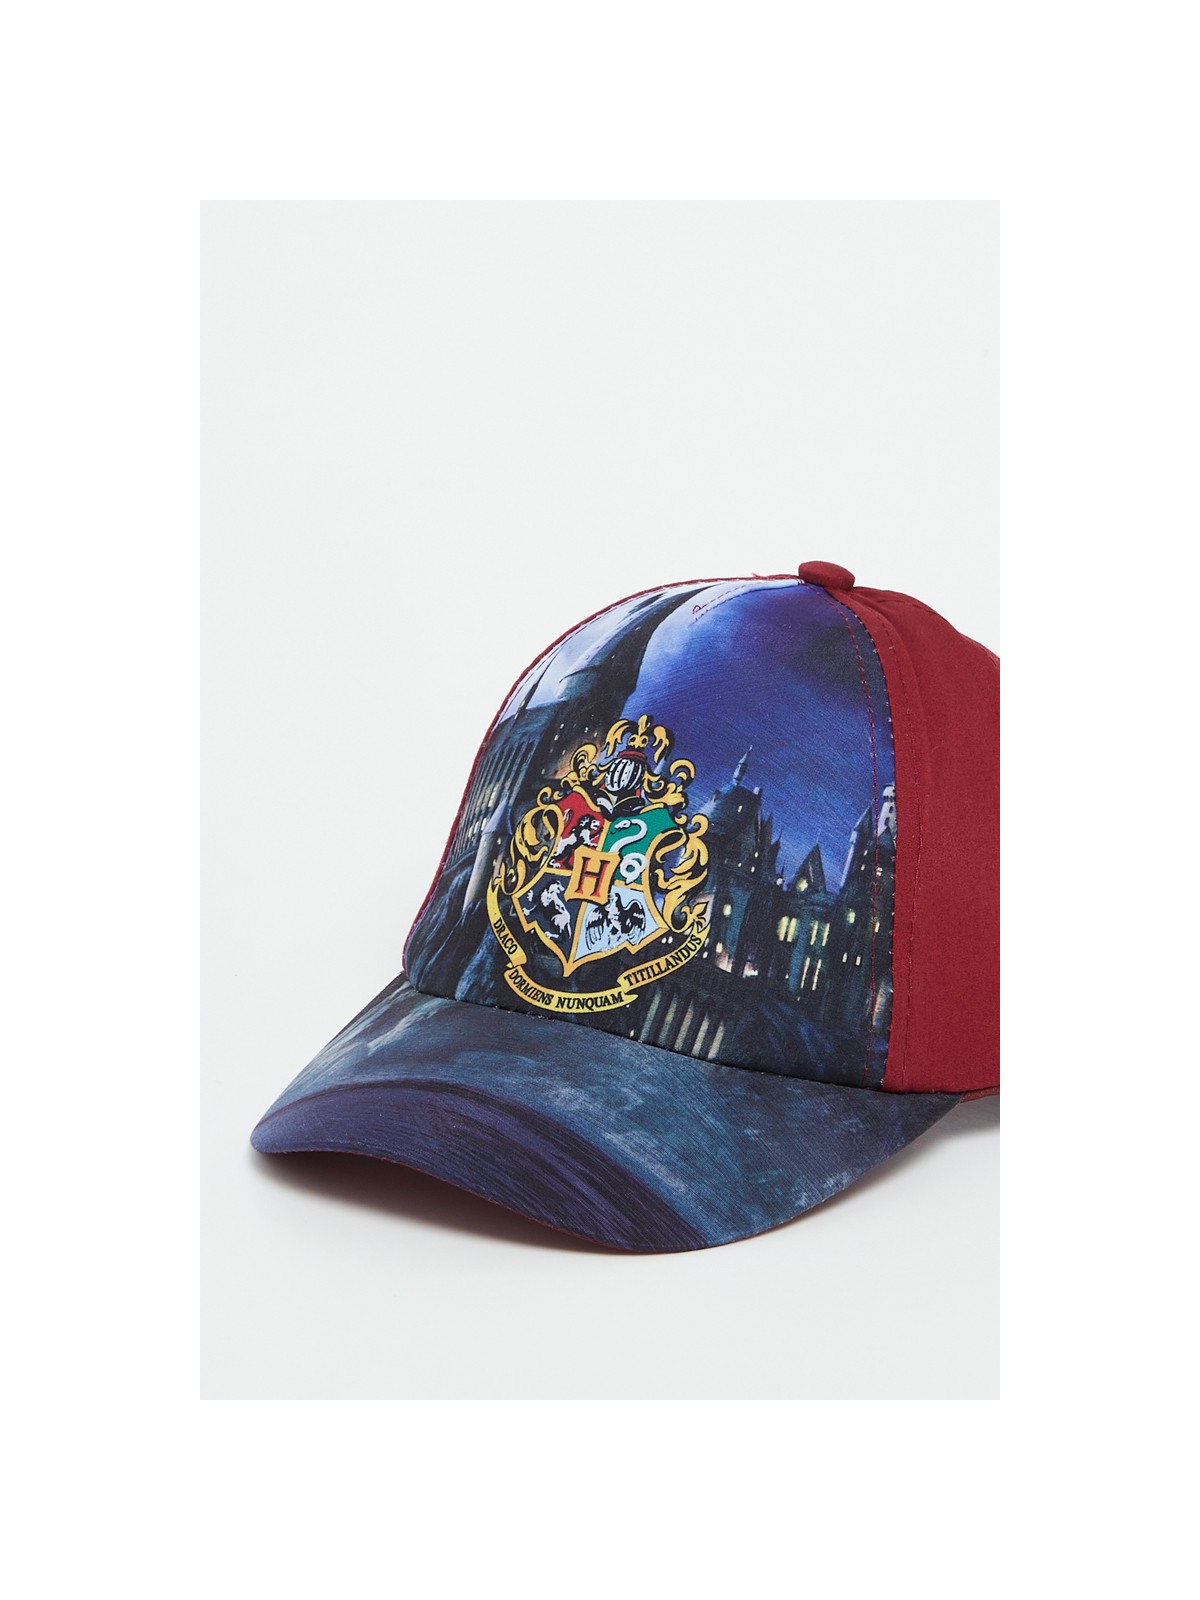 Harry Potter Cap with visor